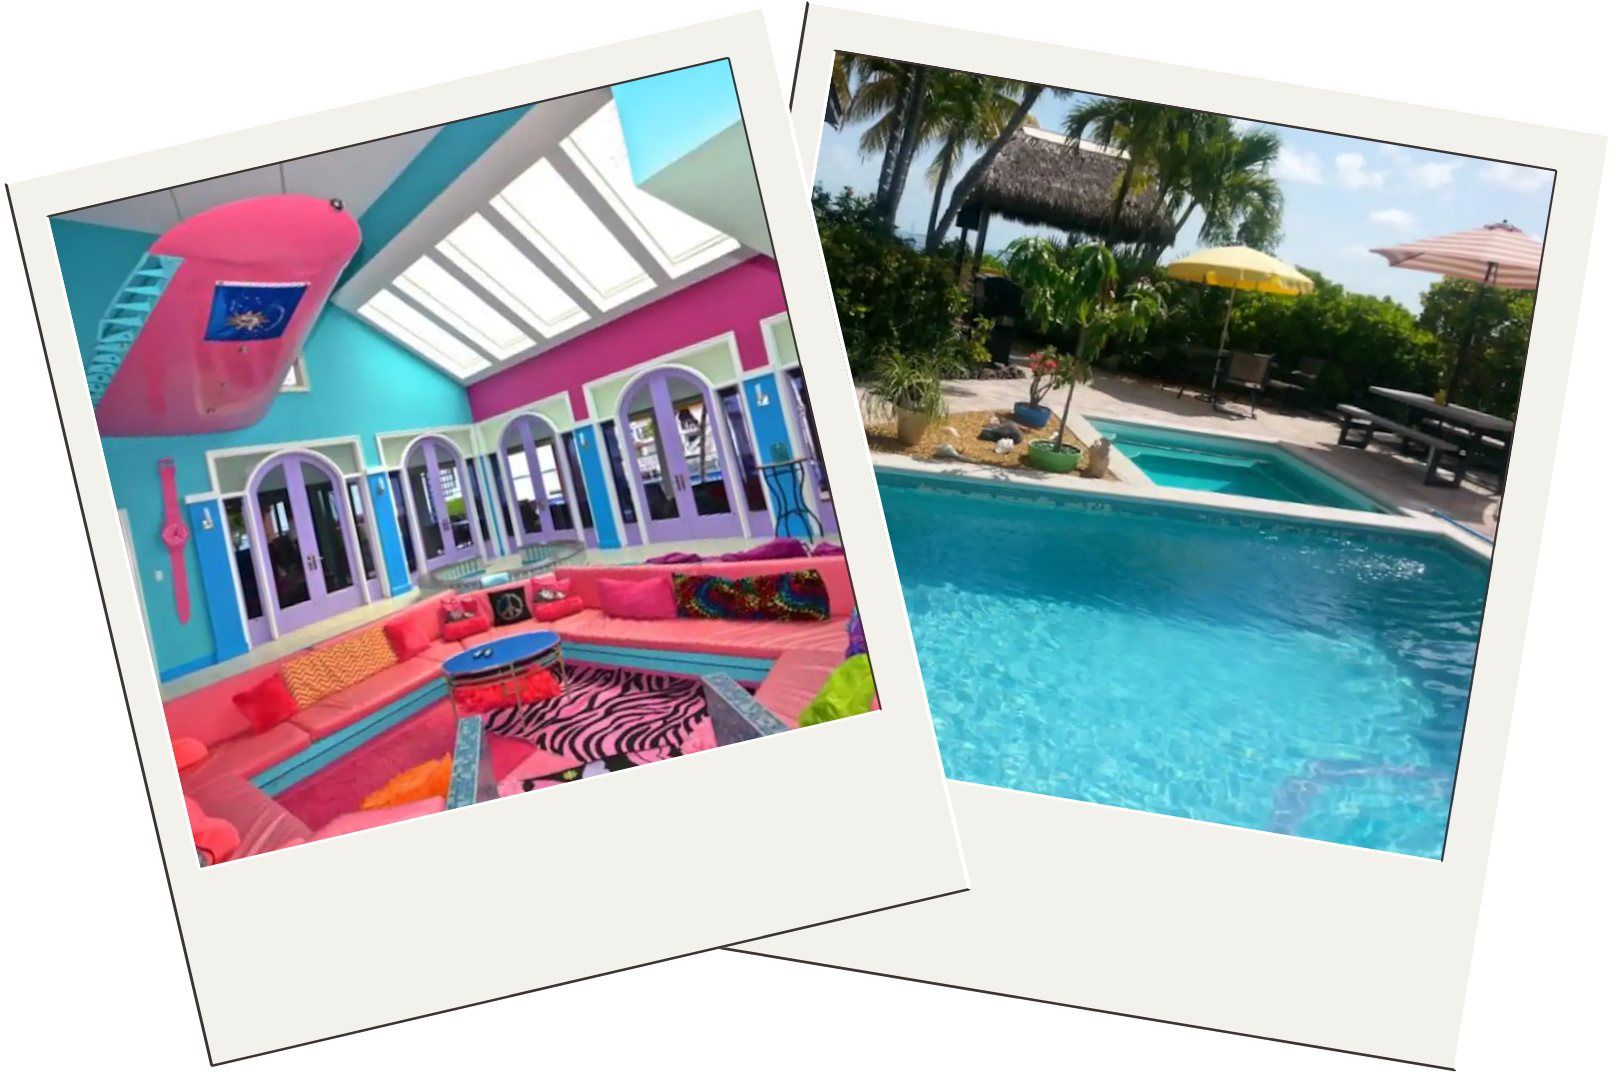 Florida Keys Luxury Vacation Rentals